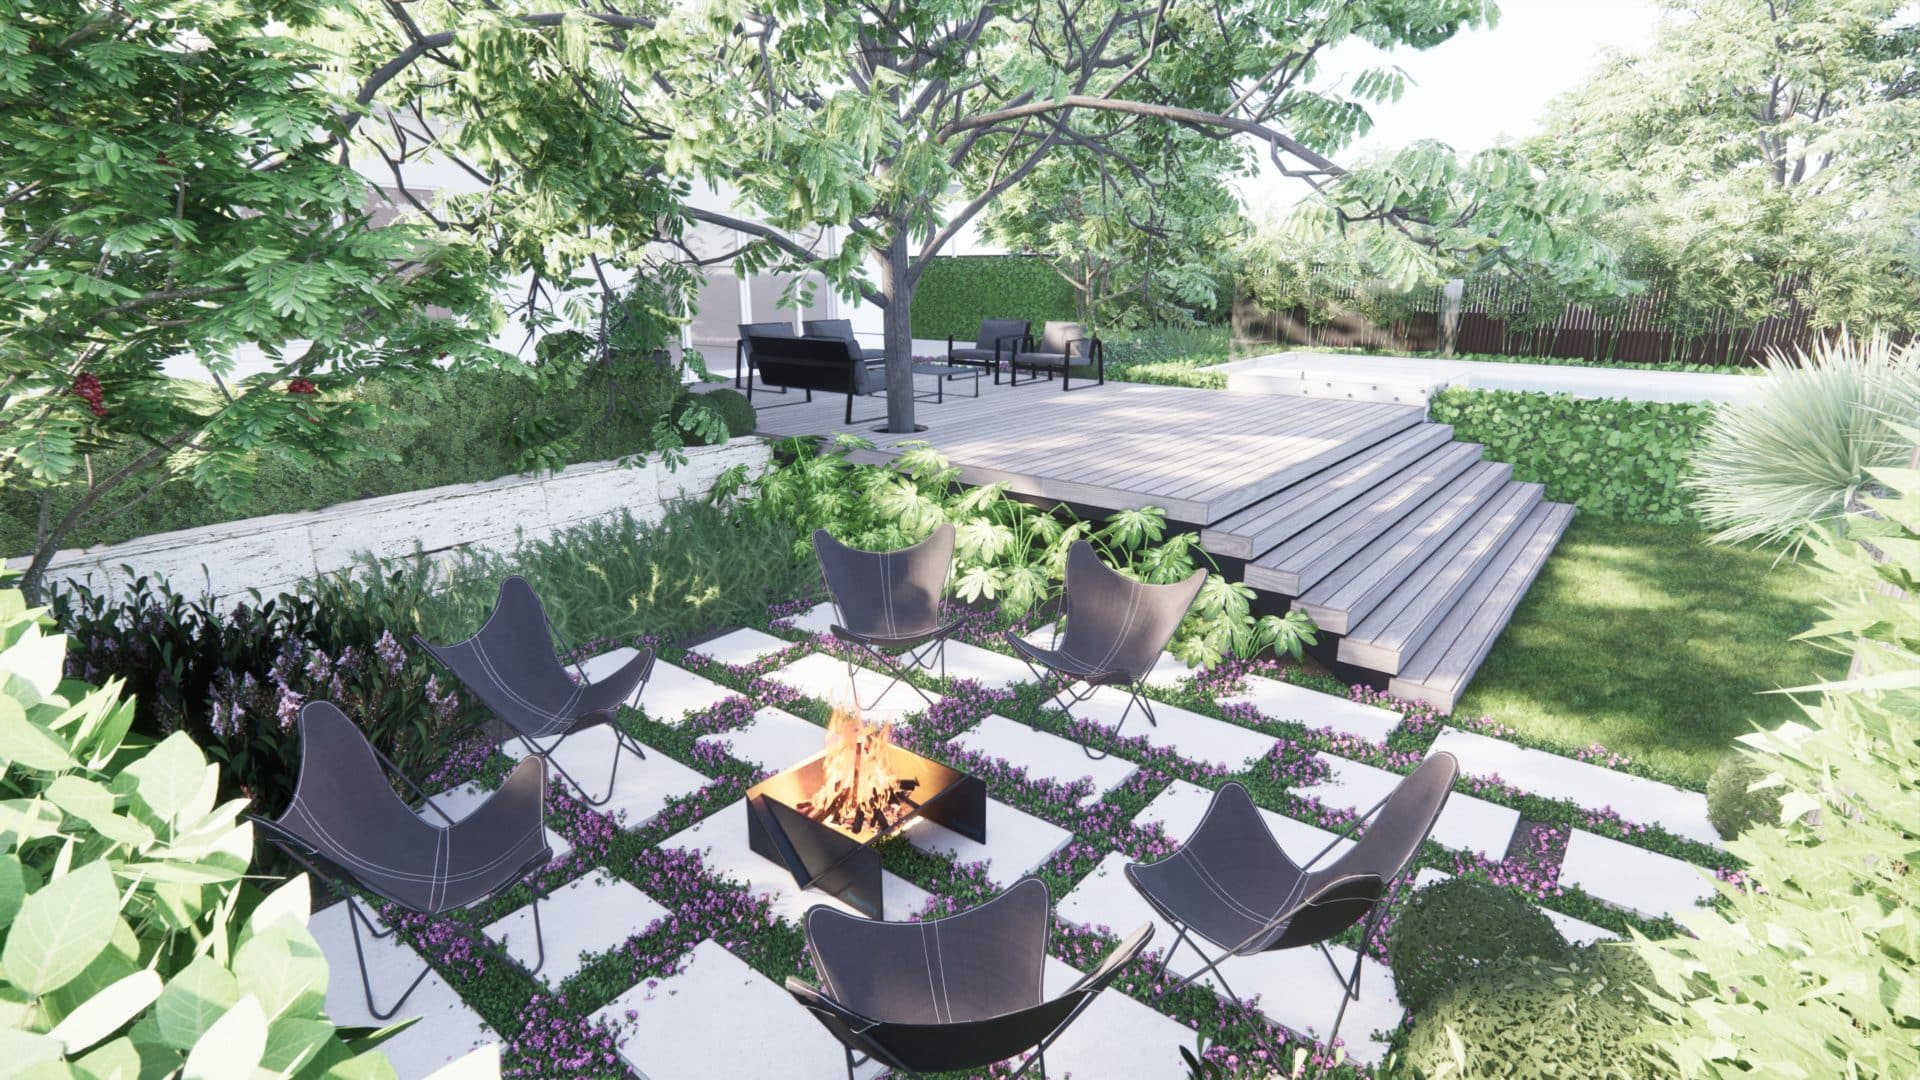 A landscape design render featuring a fire pit and conversation circle